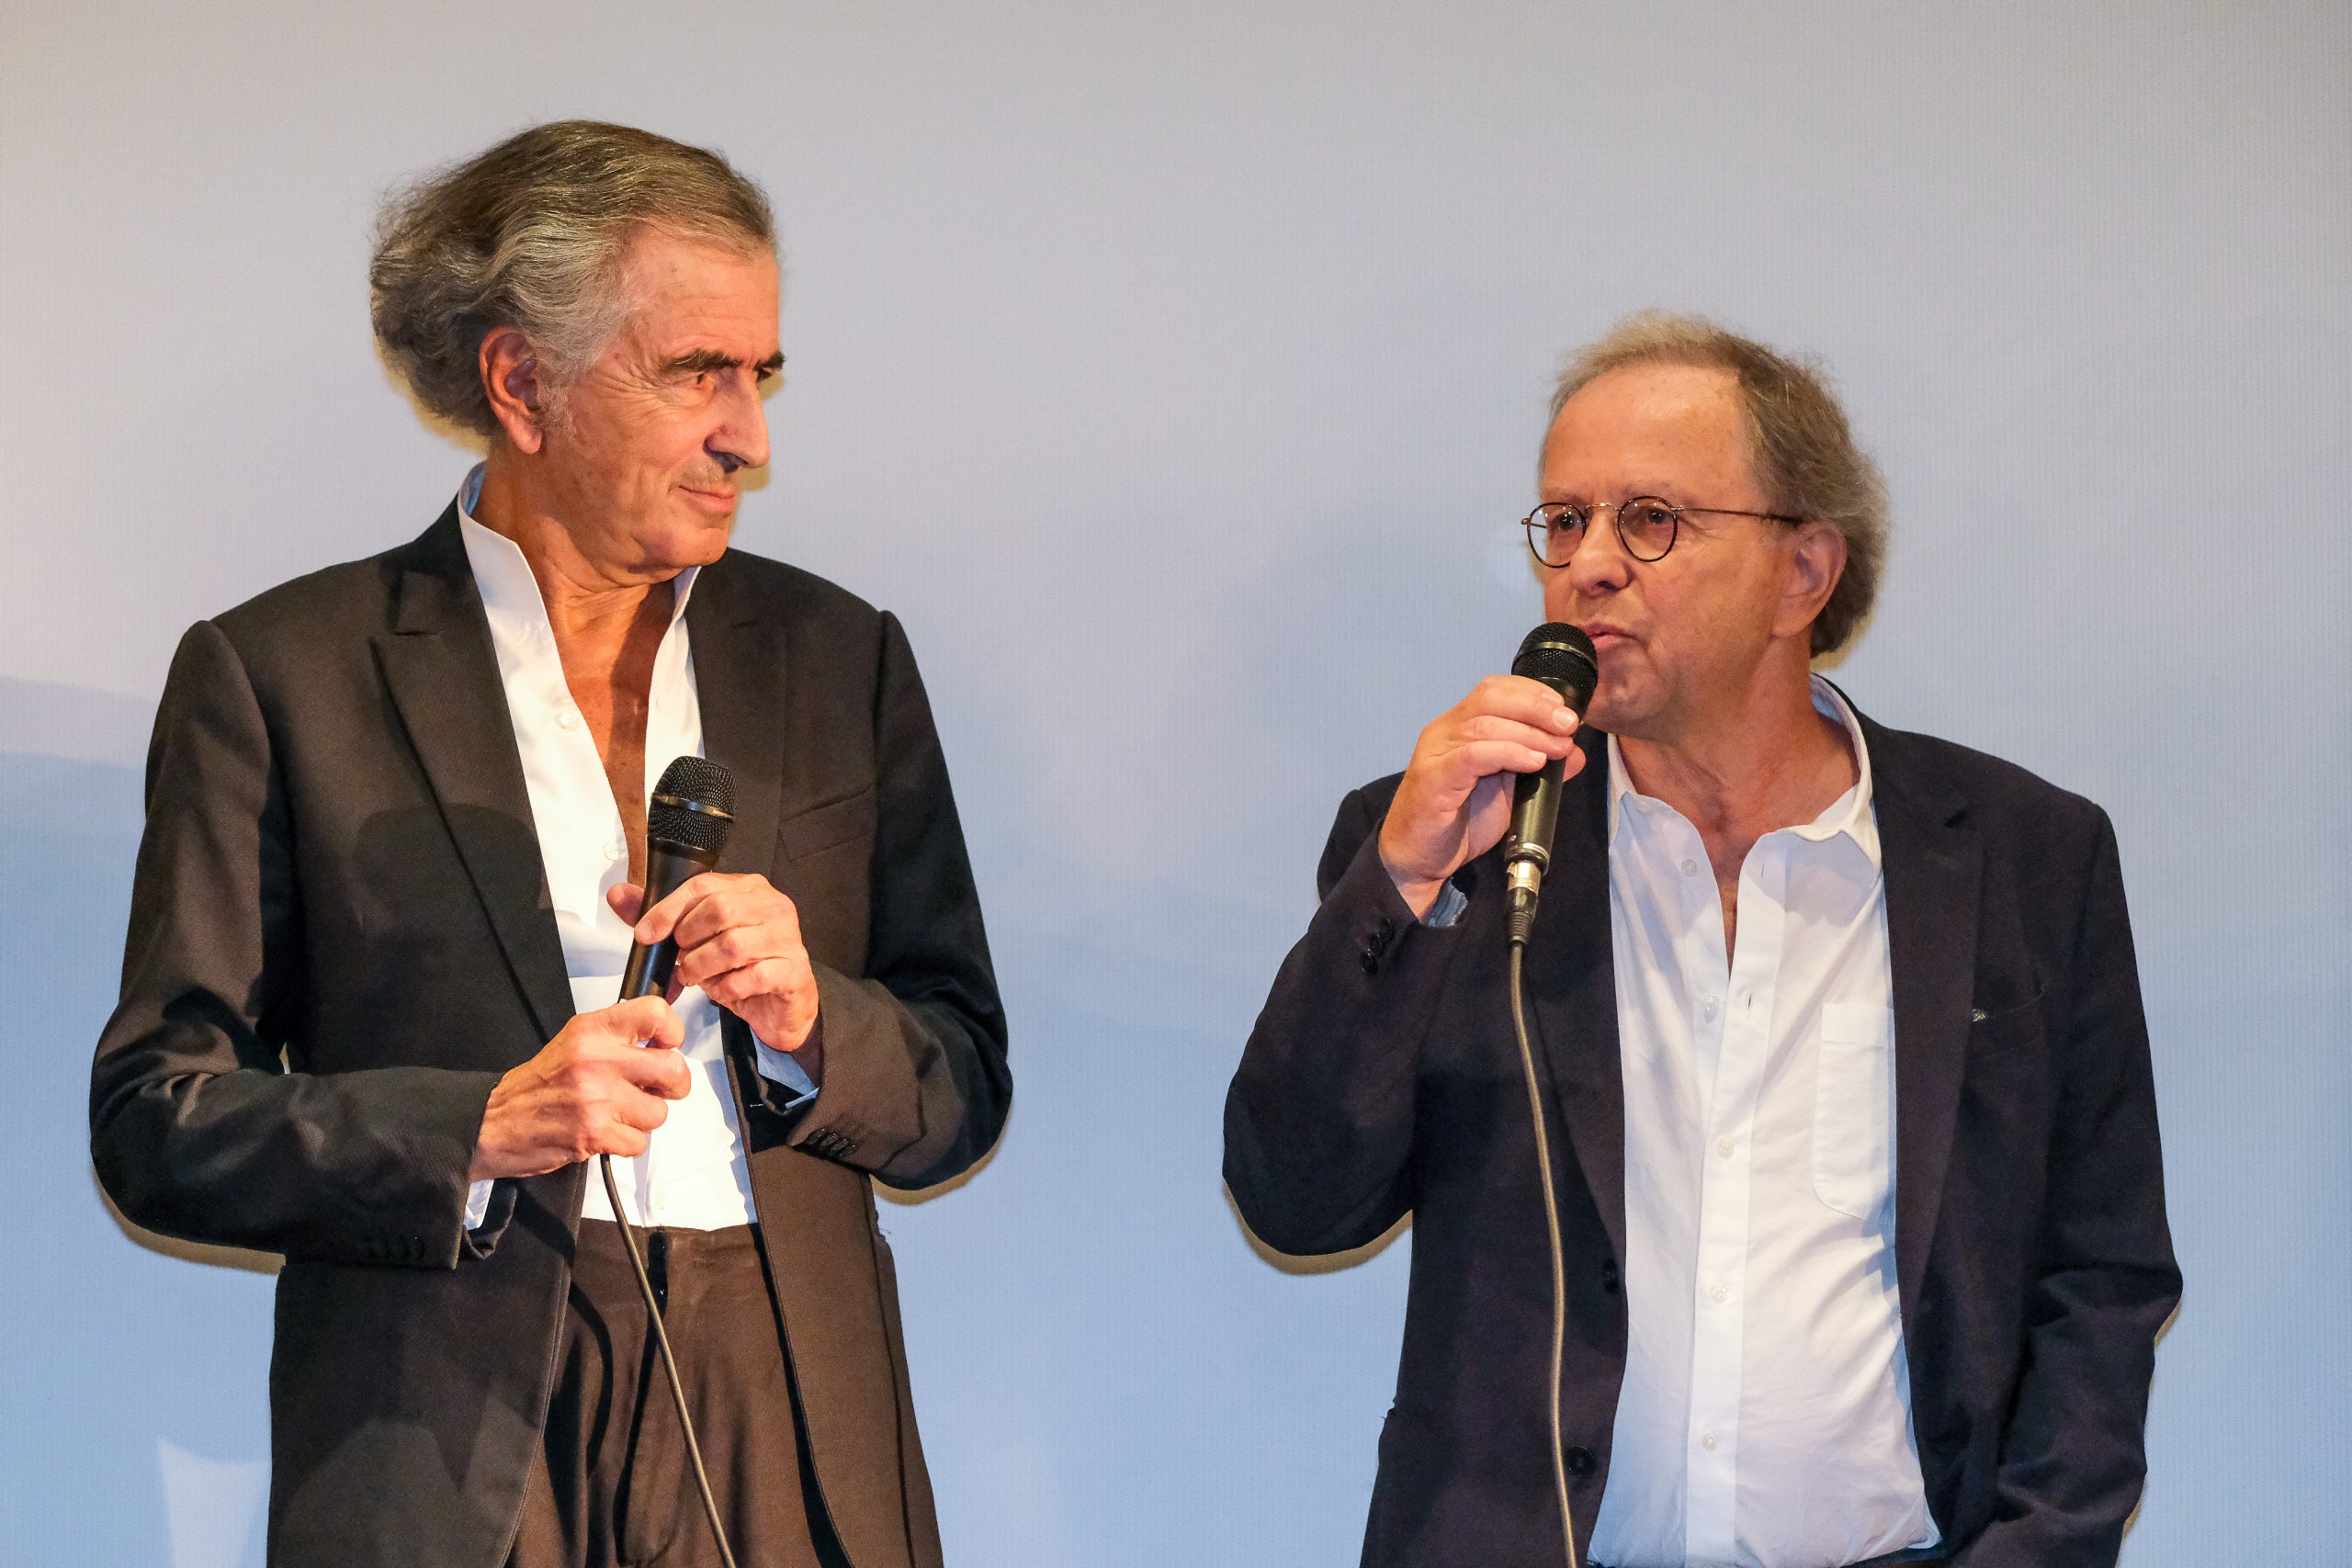 Bernard-Henri Lévy and François Margolin, producer of the film "Why Ukraine", at the Cinema Le Balzac in Paris.